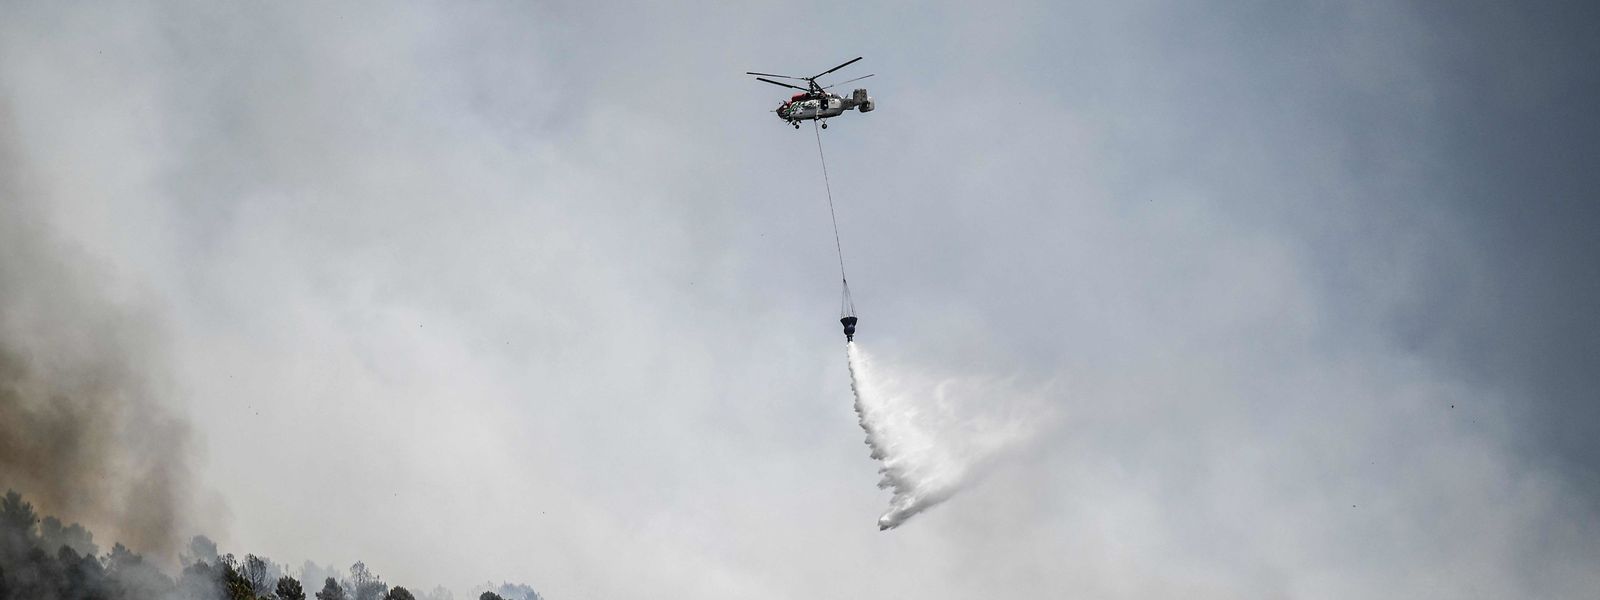 Um helicóptero efetua descarga de água sobre uma floresta na aldeia de Sameiro, perto da vila de Manteigas, a 10 de agosto